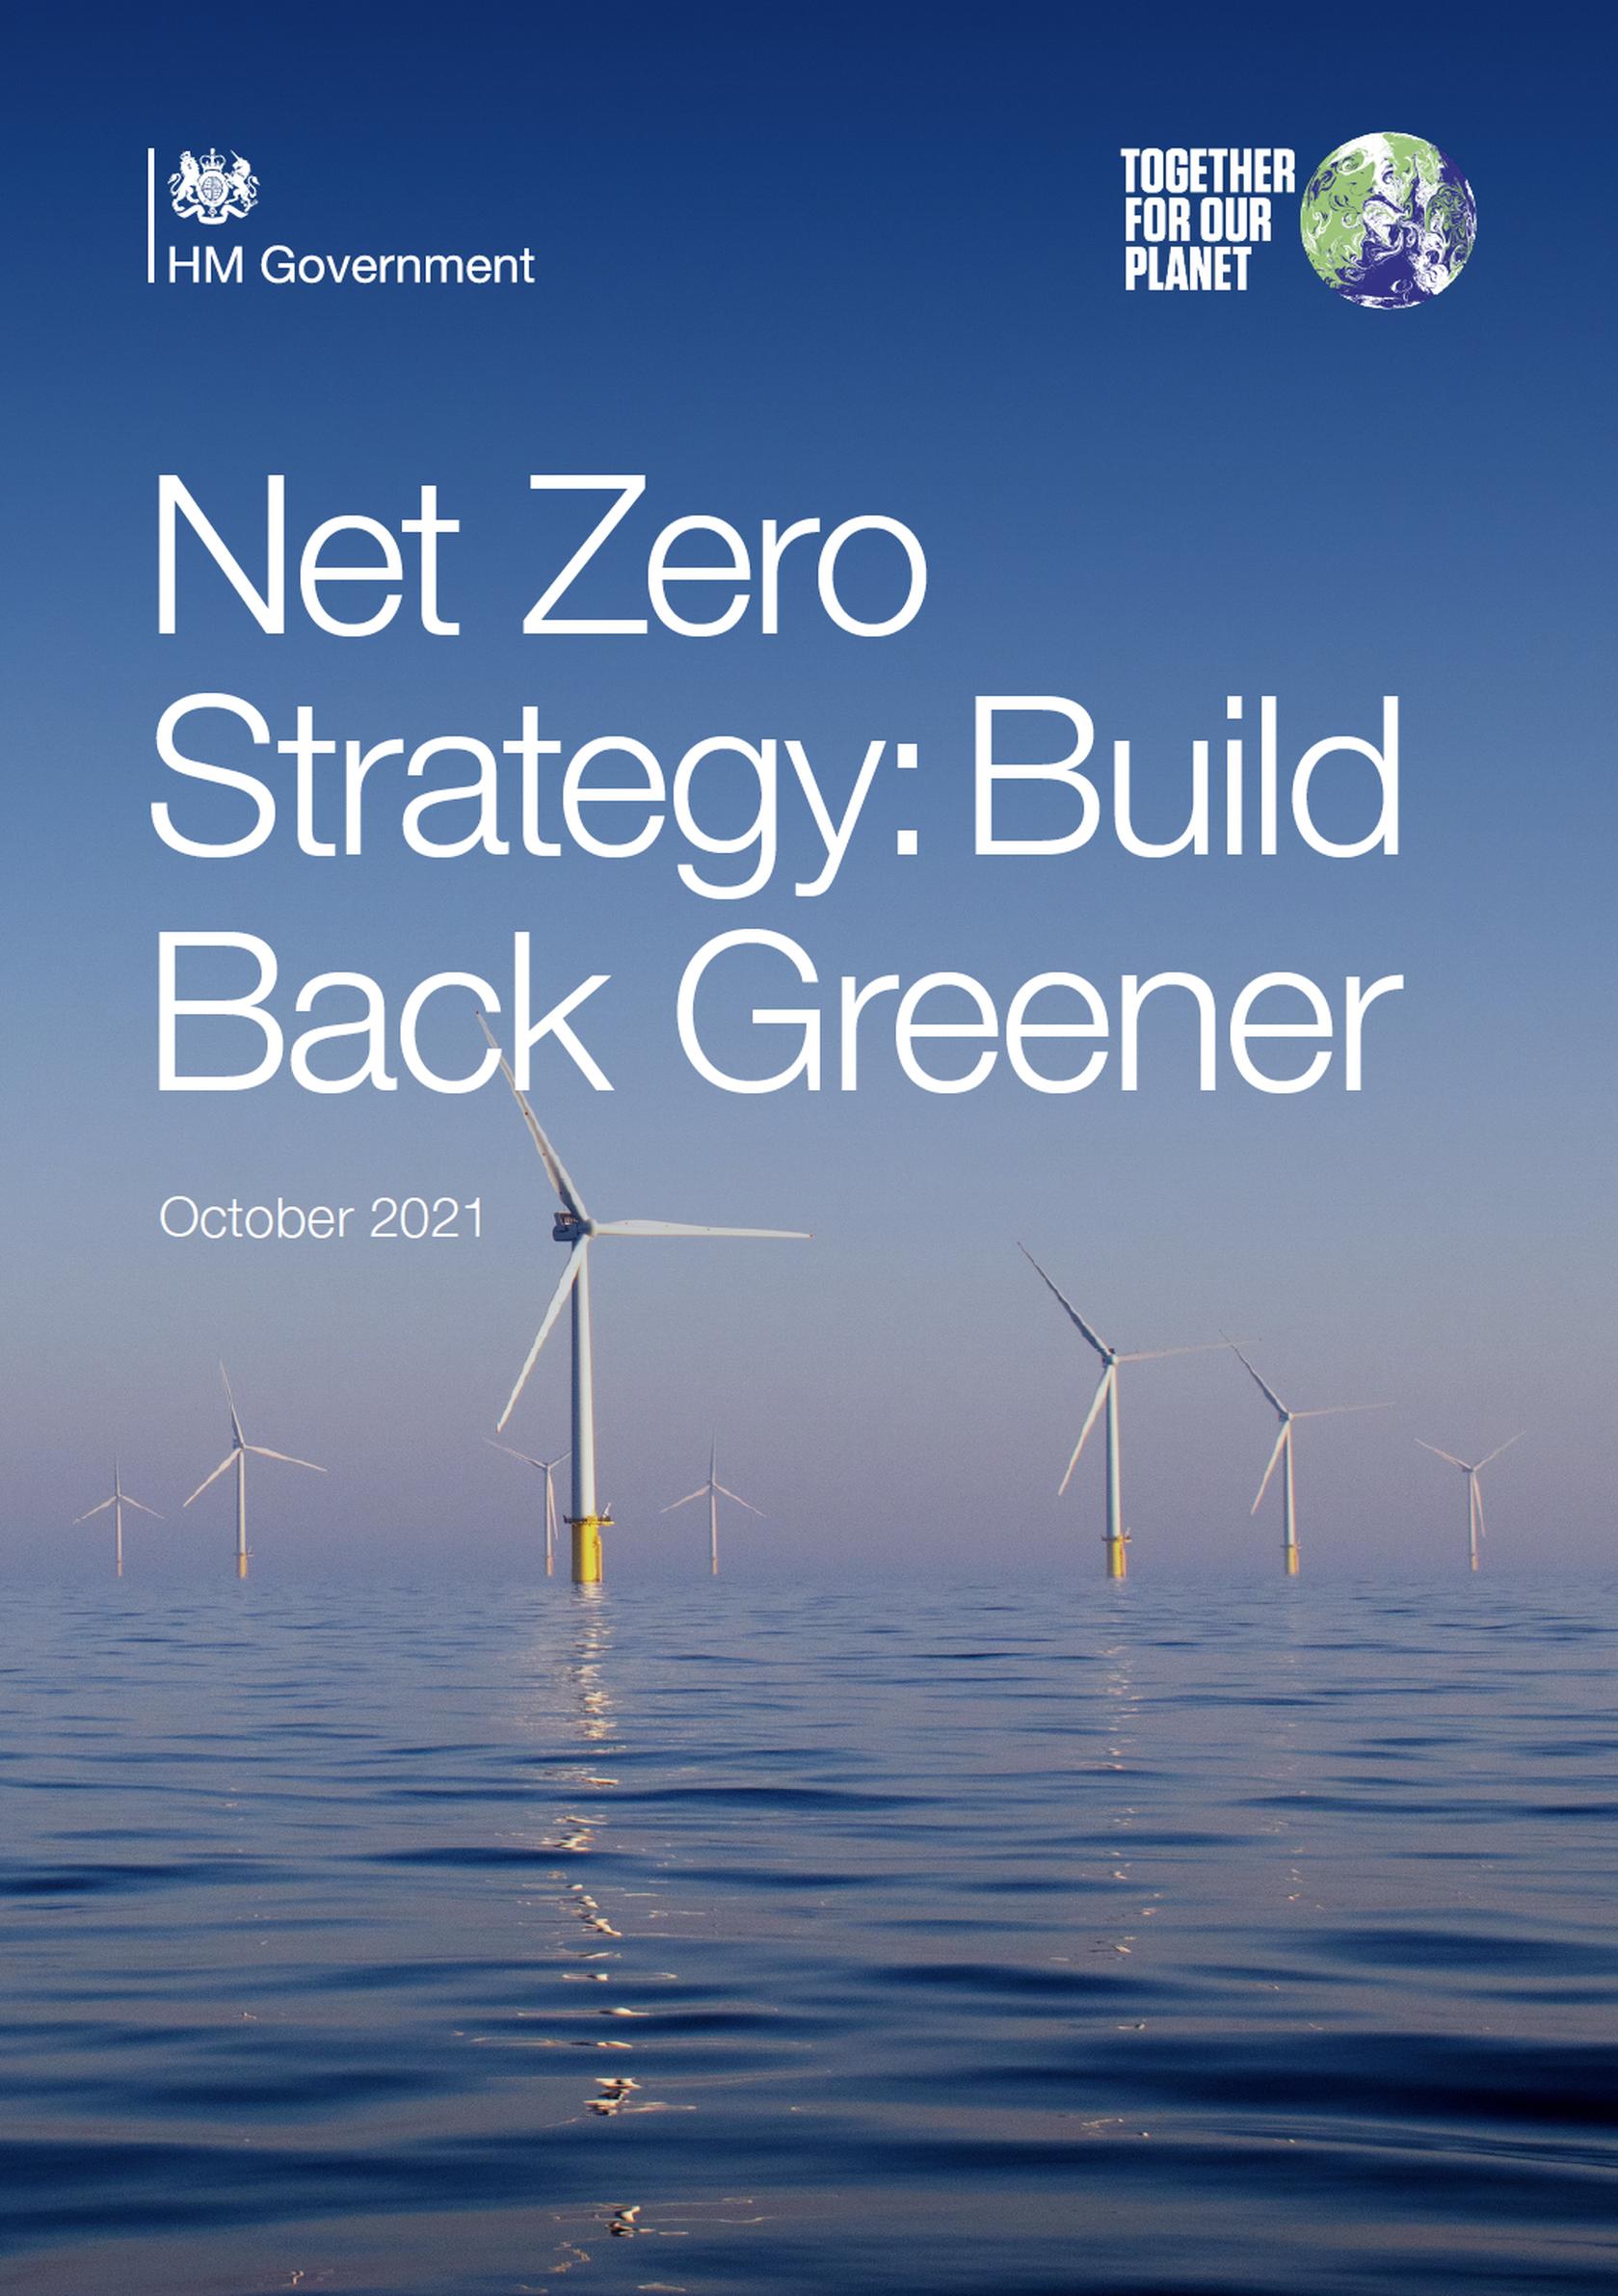 Net Zero Strategy: Build Back Greener